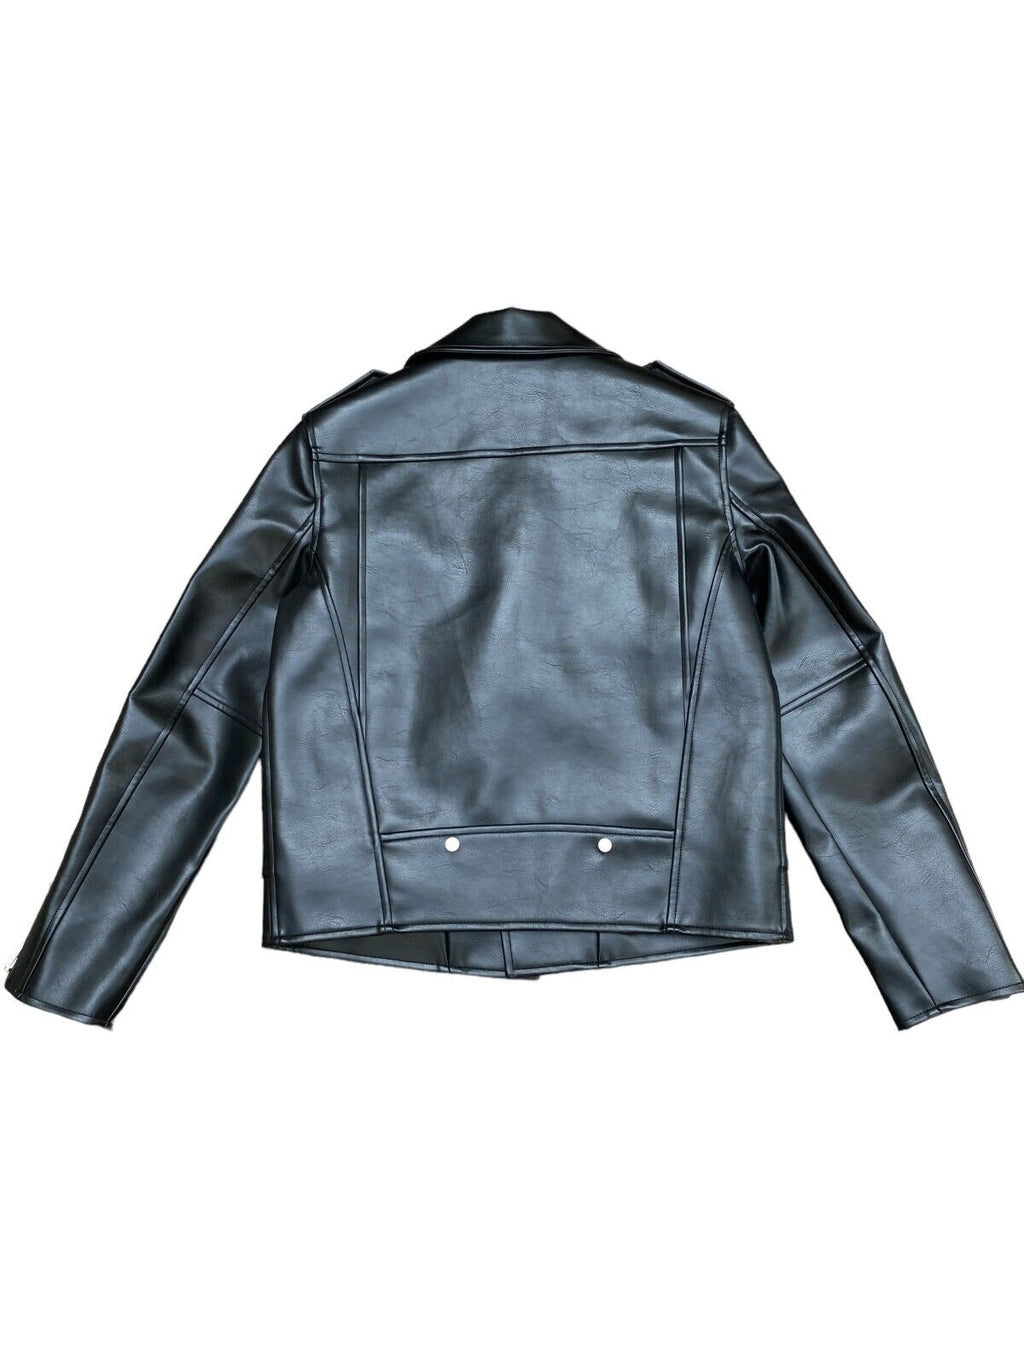 Vegan leather Biker Jacket Floyd Shadow Size M